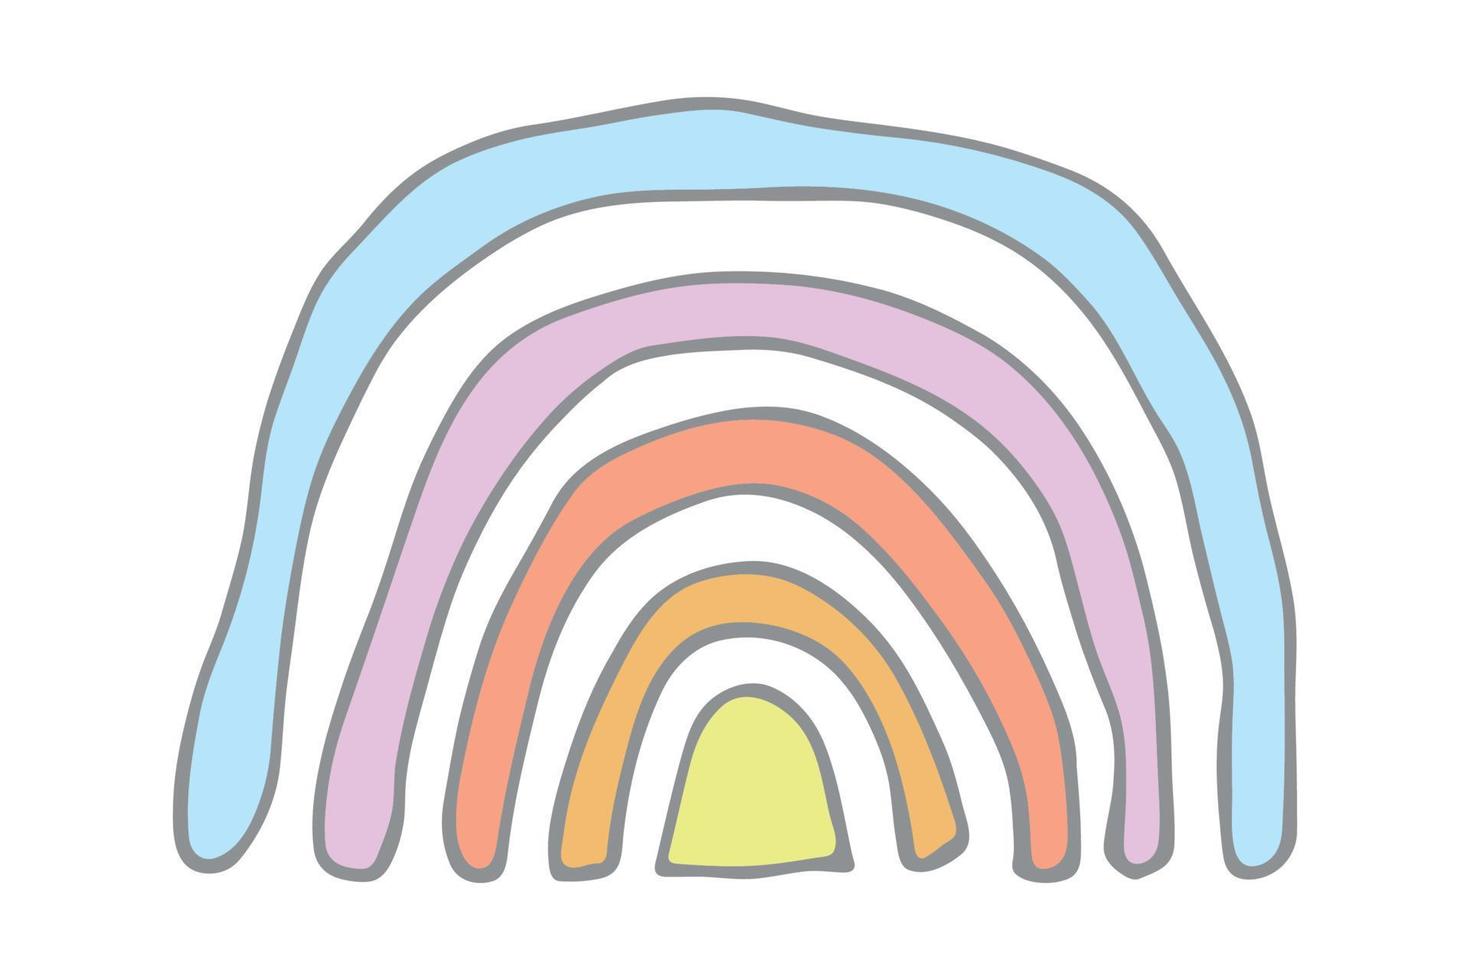 Single rainbow doodle illustration. Hand drawn clipart for card, design vector